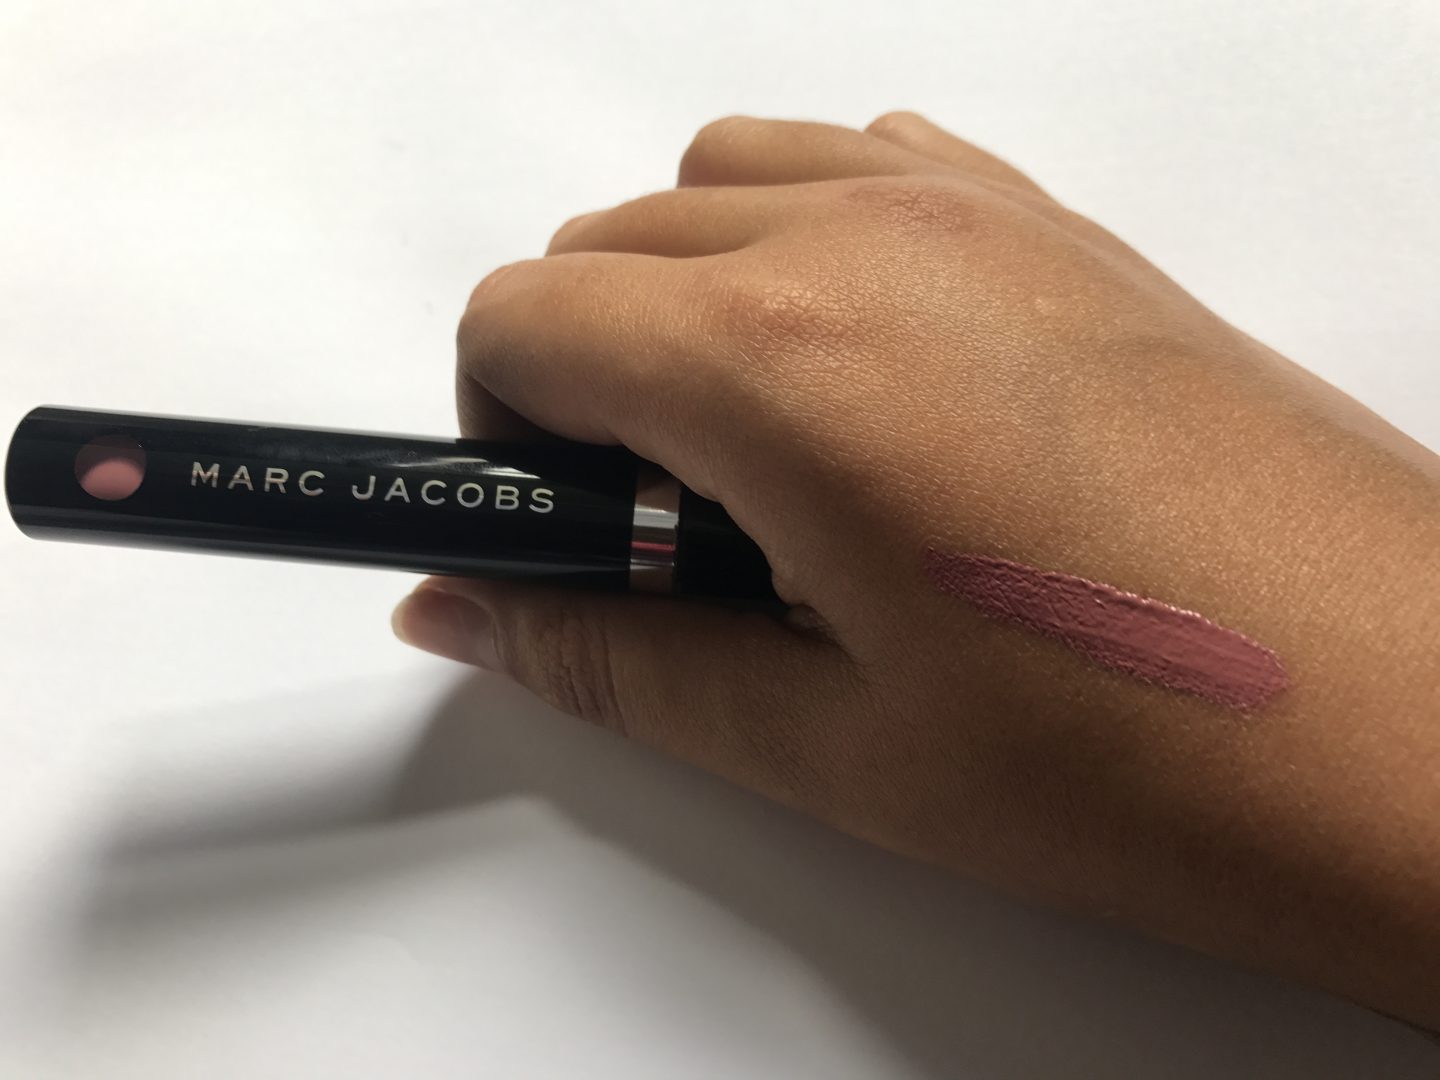 Marc Jacobs Lip Creme